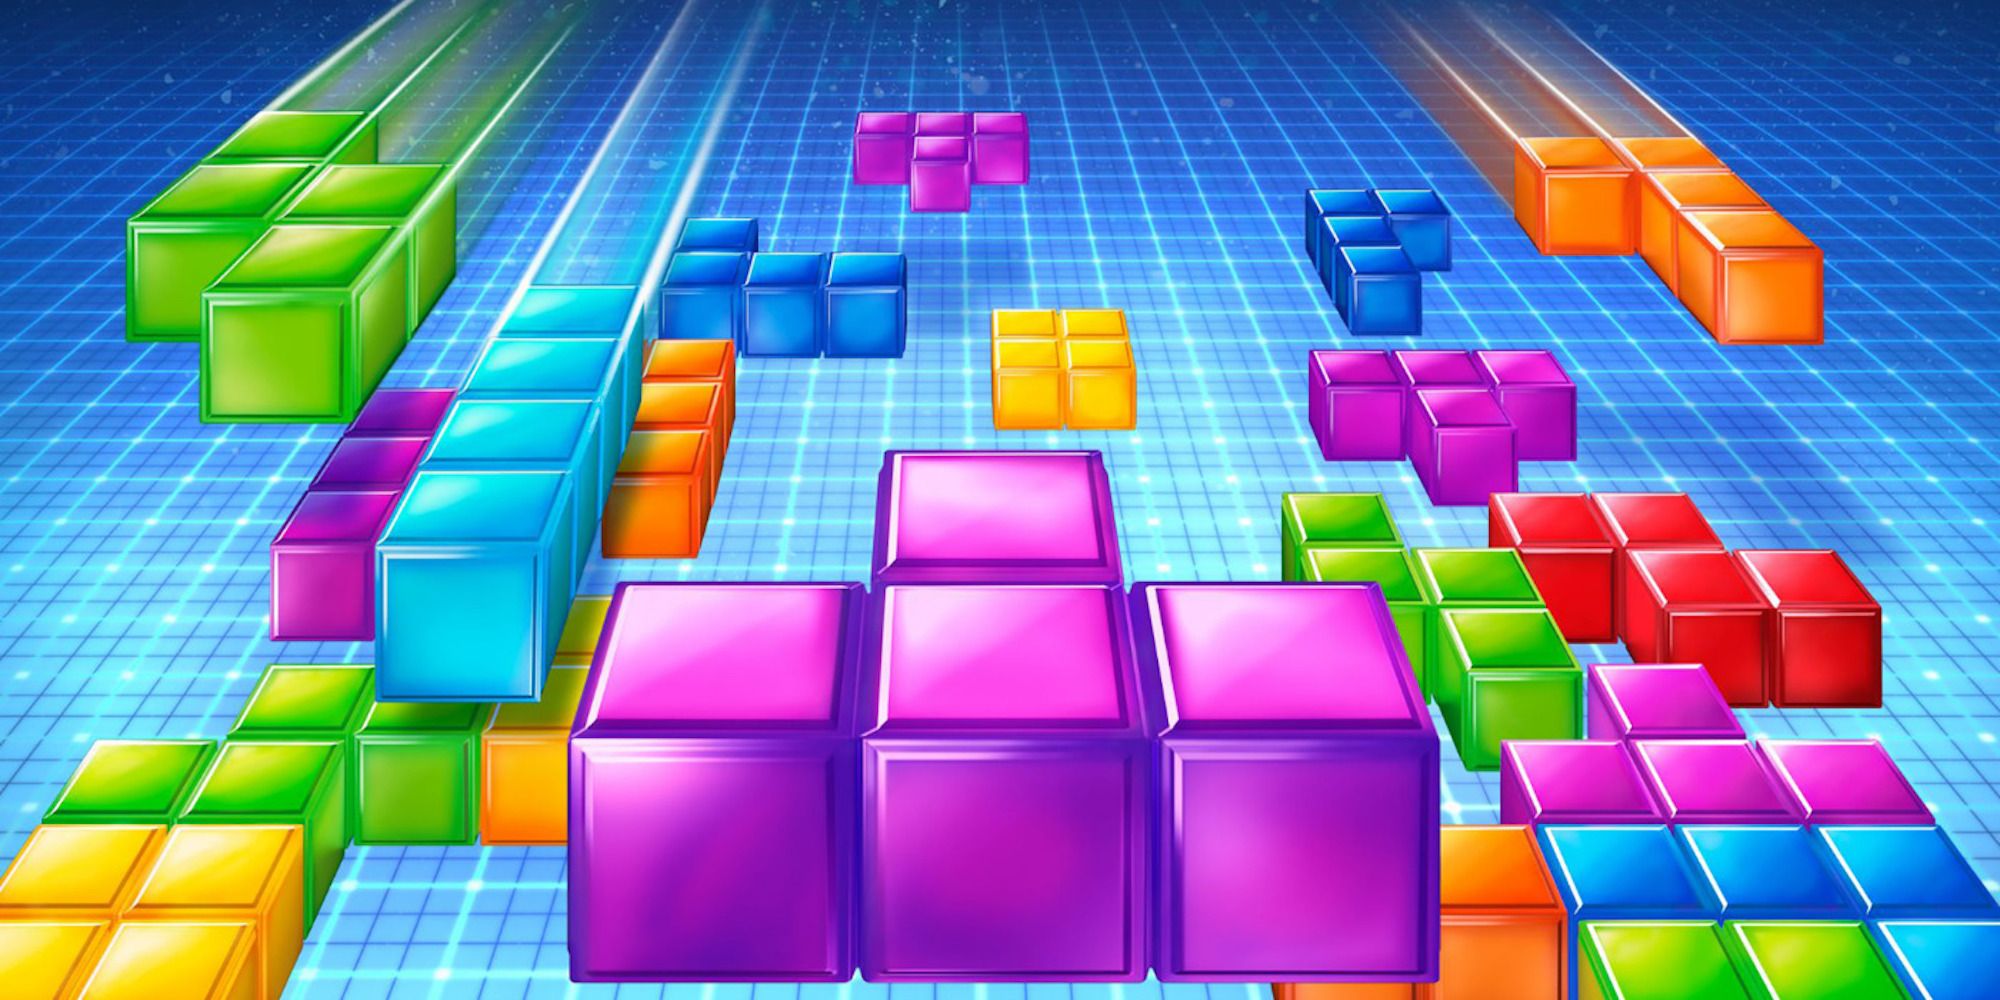 Tetris blocks from Tetris